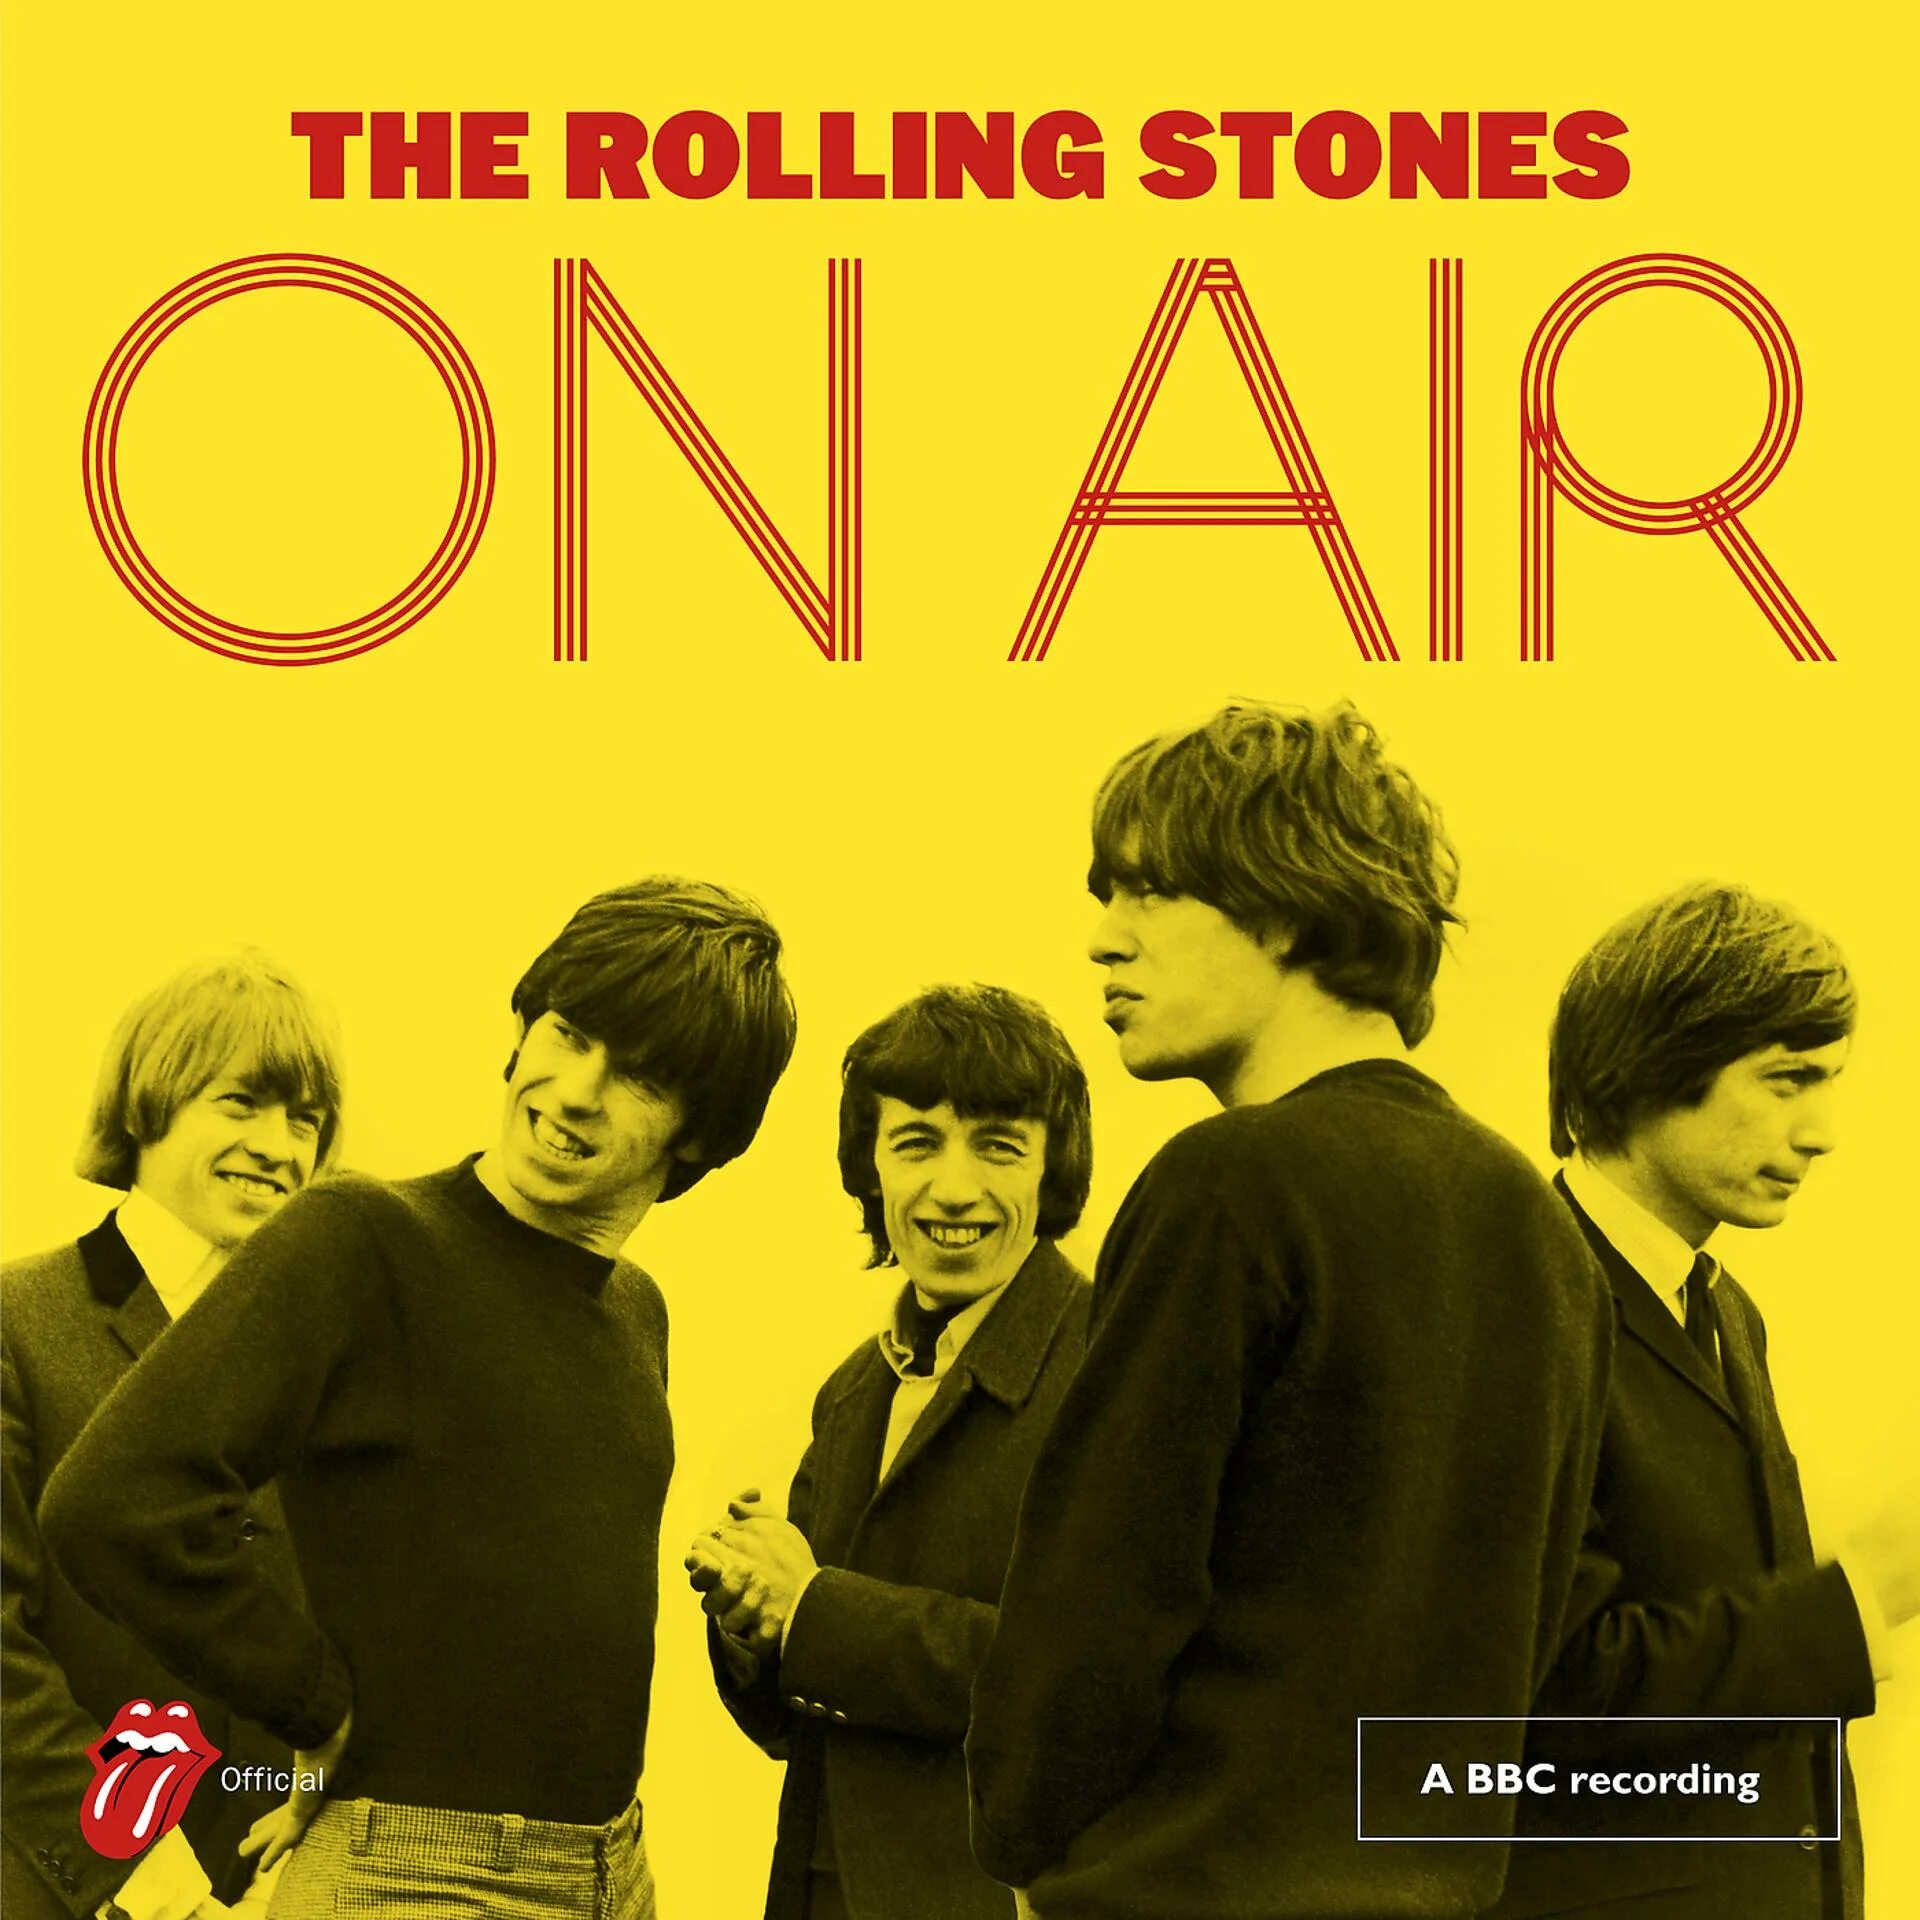 Stones трек. The Rolling Stones on Air. Книга Роллинг стоунз. Rolling Stones Sixty. The Rolling Stones CD.